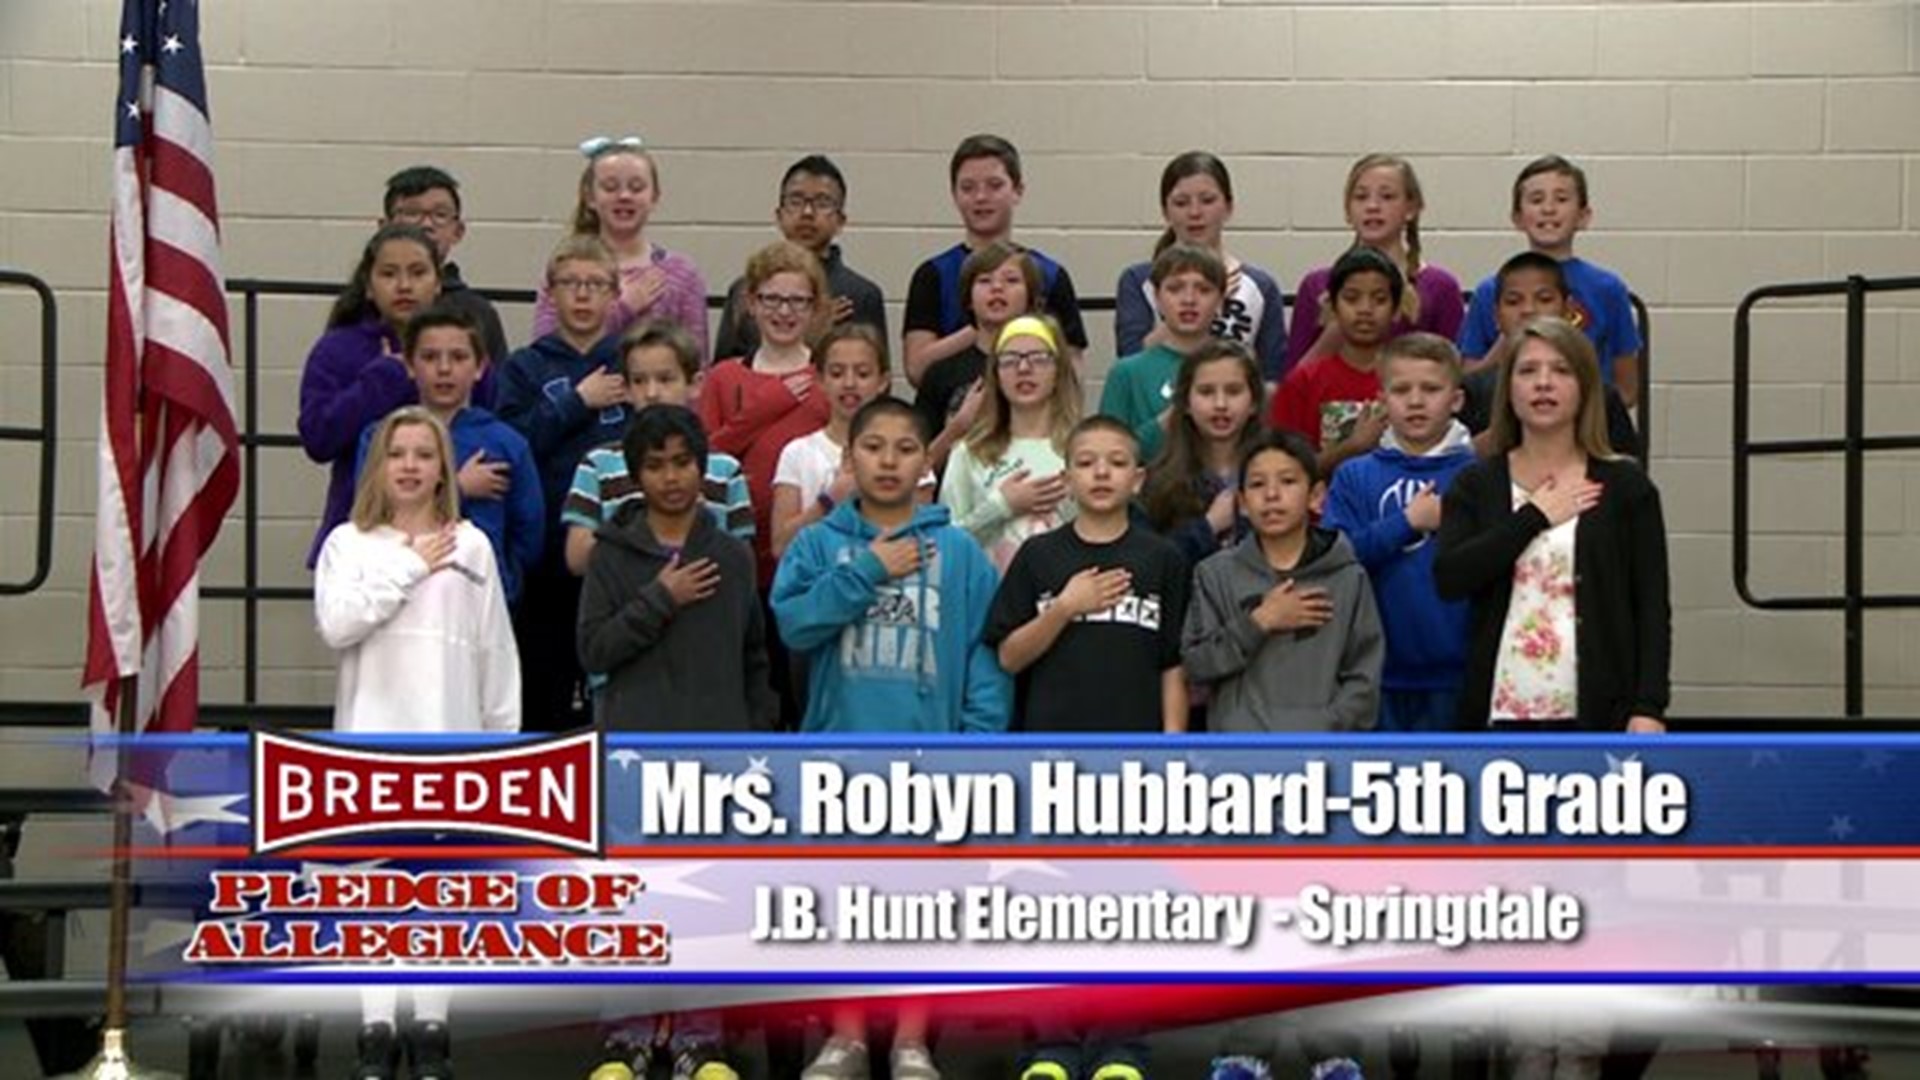 J.B. Hunt Elemtentary, Springdale - Mrs. Robyn Hubbard - 5th Grade